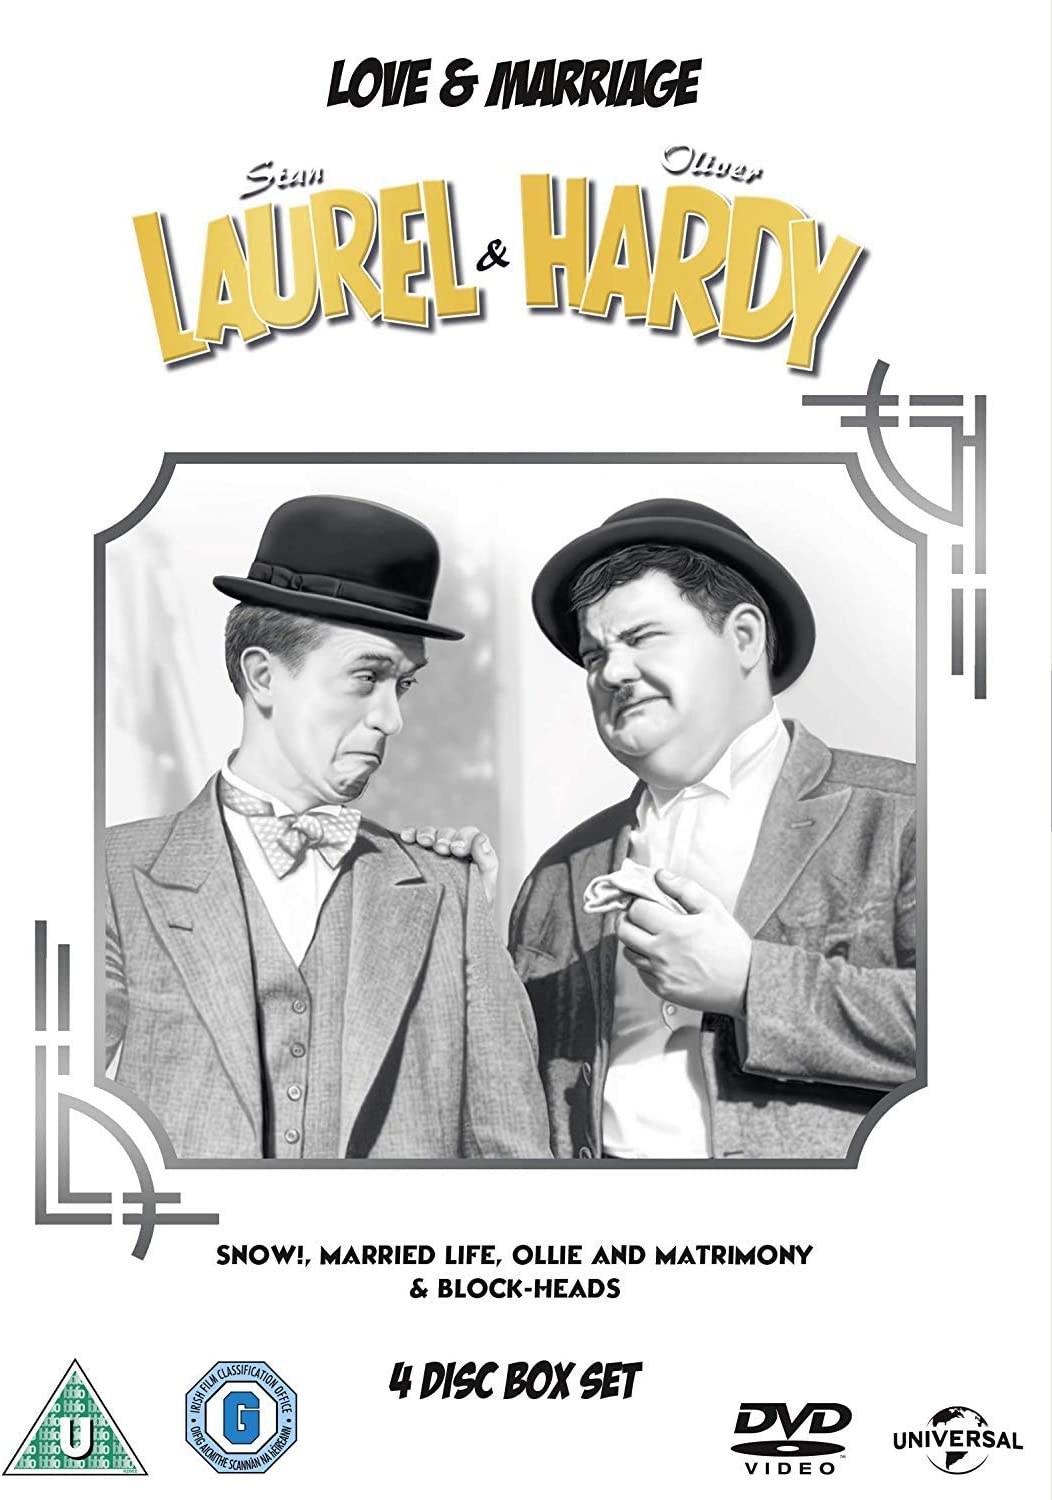 Laurel & Hardy: Love & Marriage [DVD]